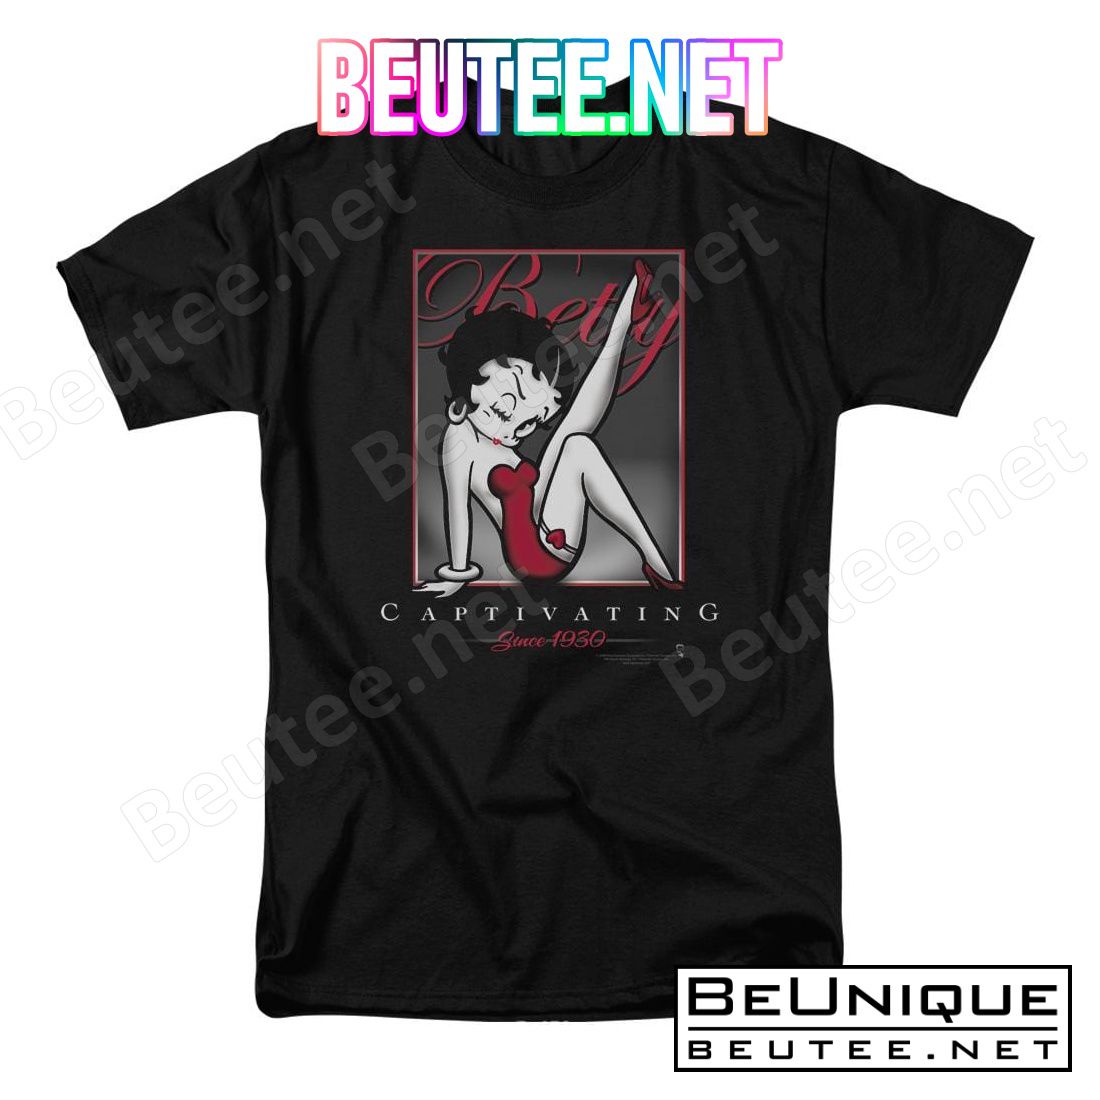 Betty Boop Captivating T-shirt